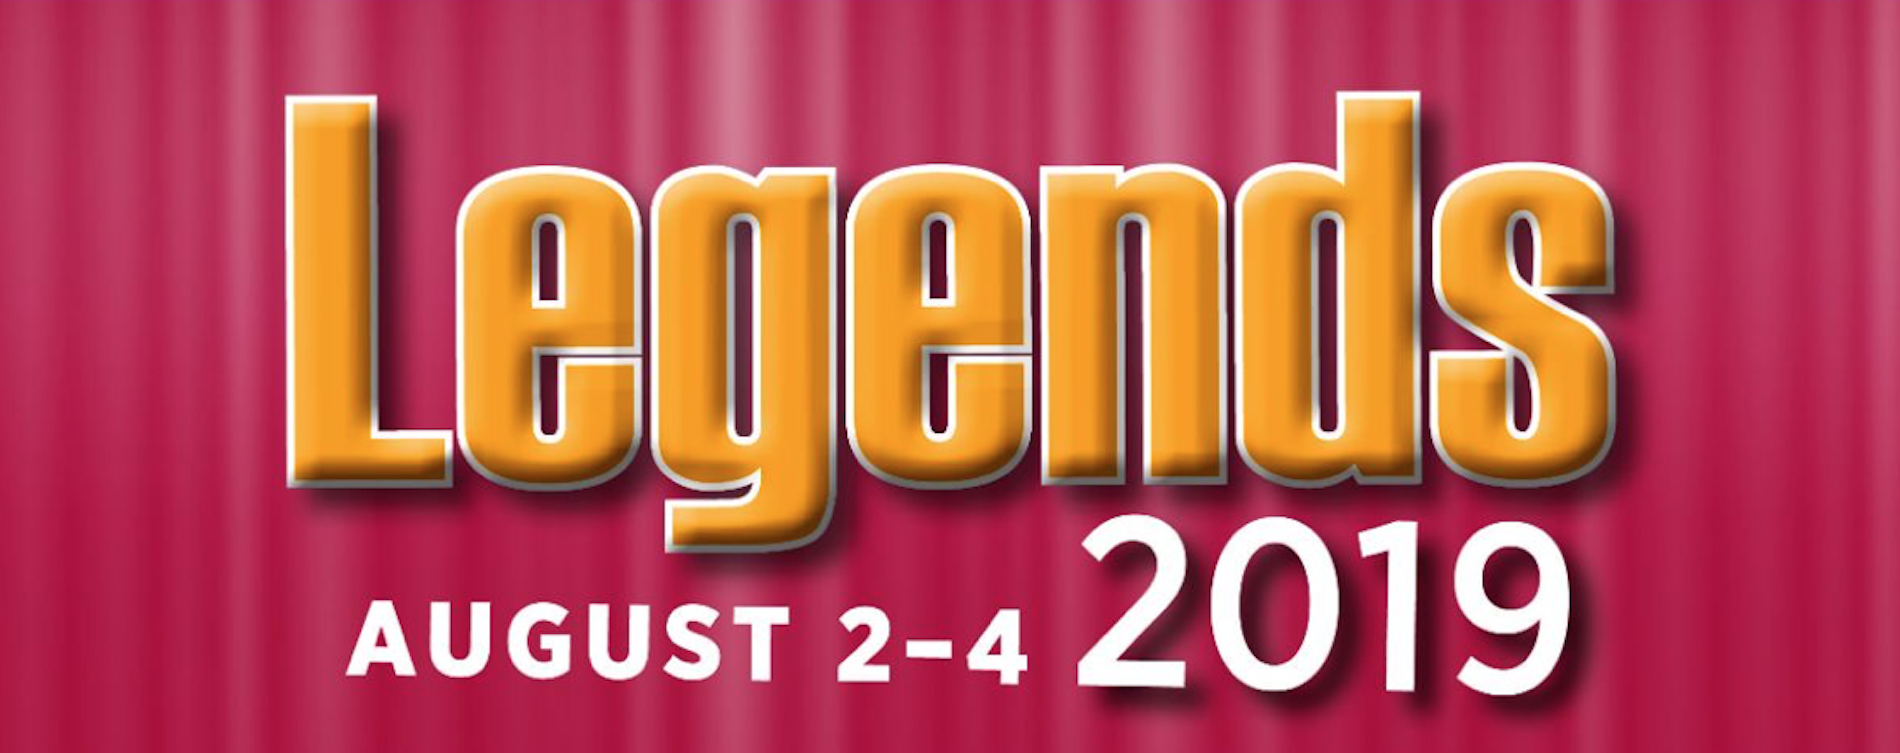 Legends Weekend Registration is Now Open!